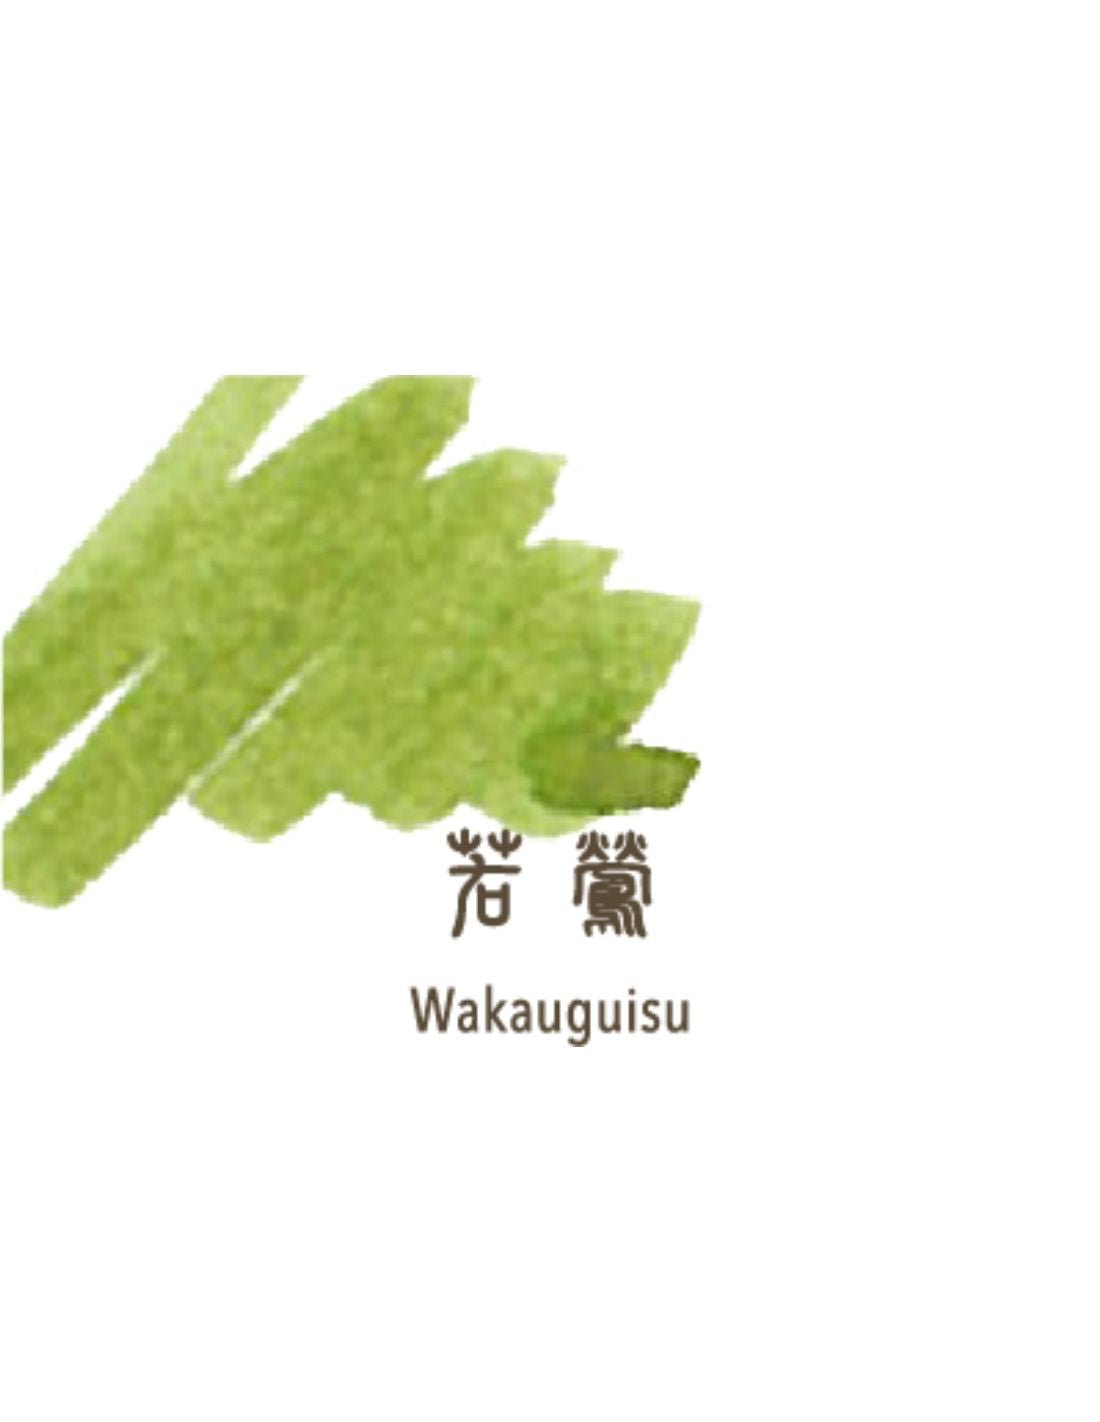 Flacon d'encre SAILOR Shikiori - 20 ml - Wakauguisu - 4901680184713